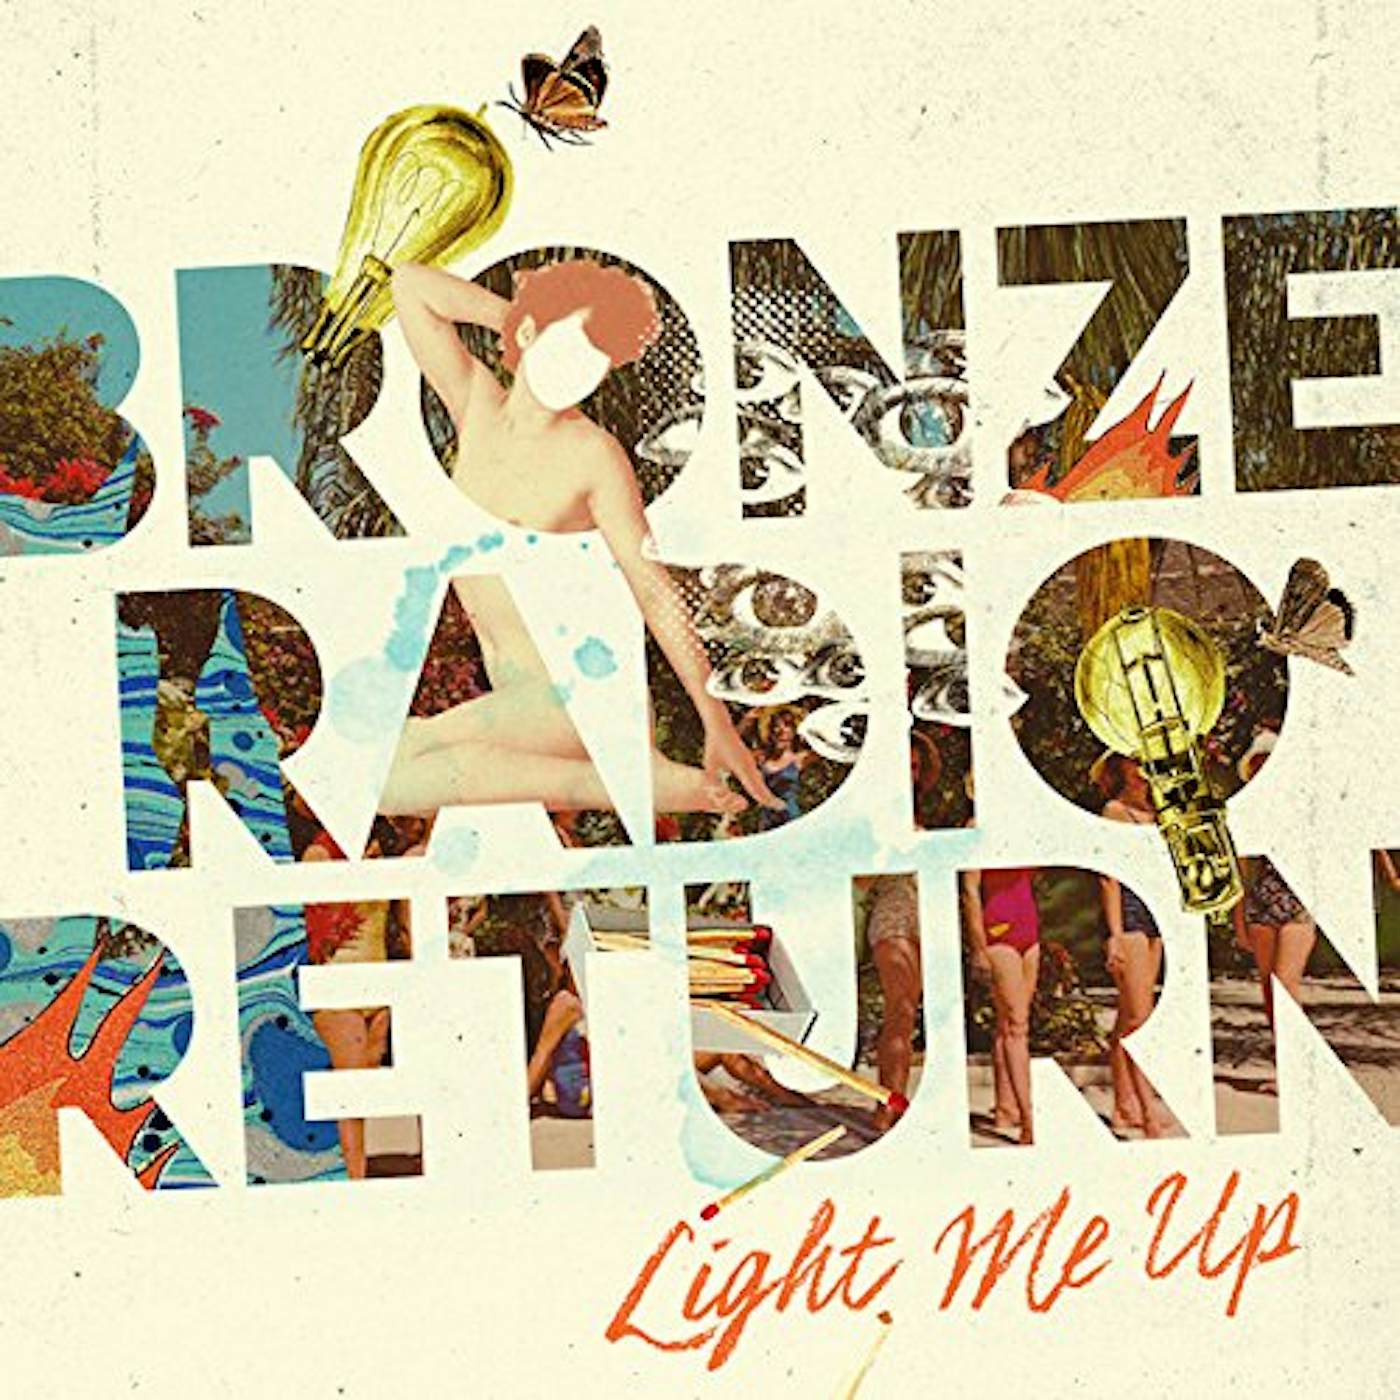 Bronze Radio Return Light Me Up Vinyl Record